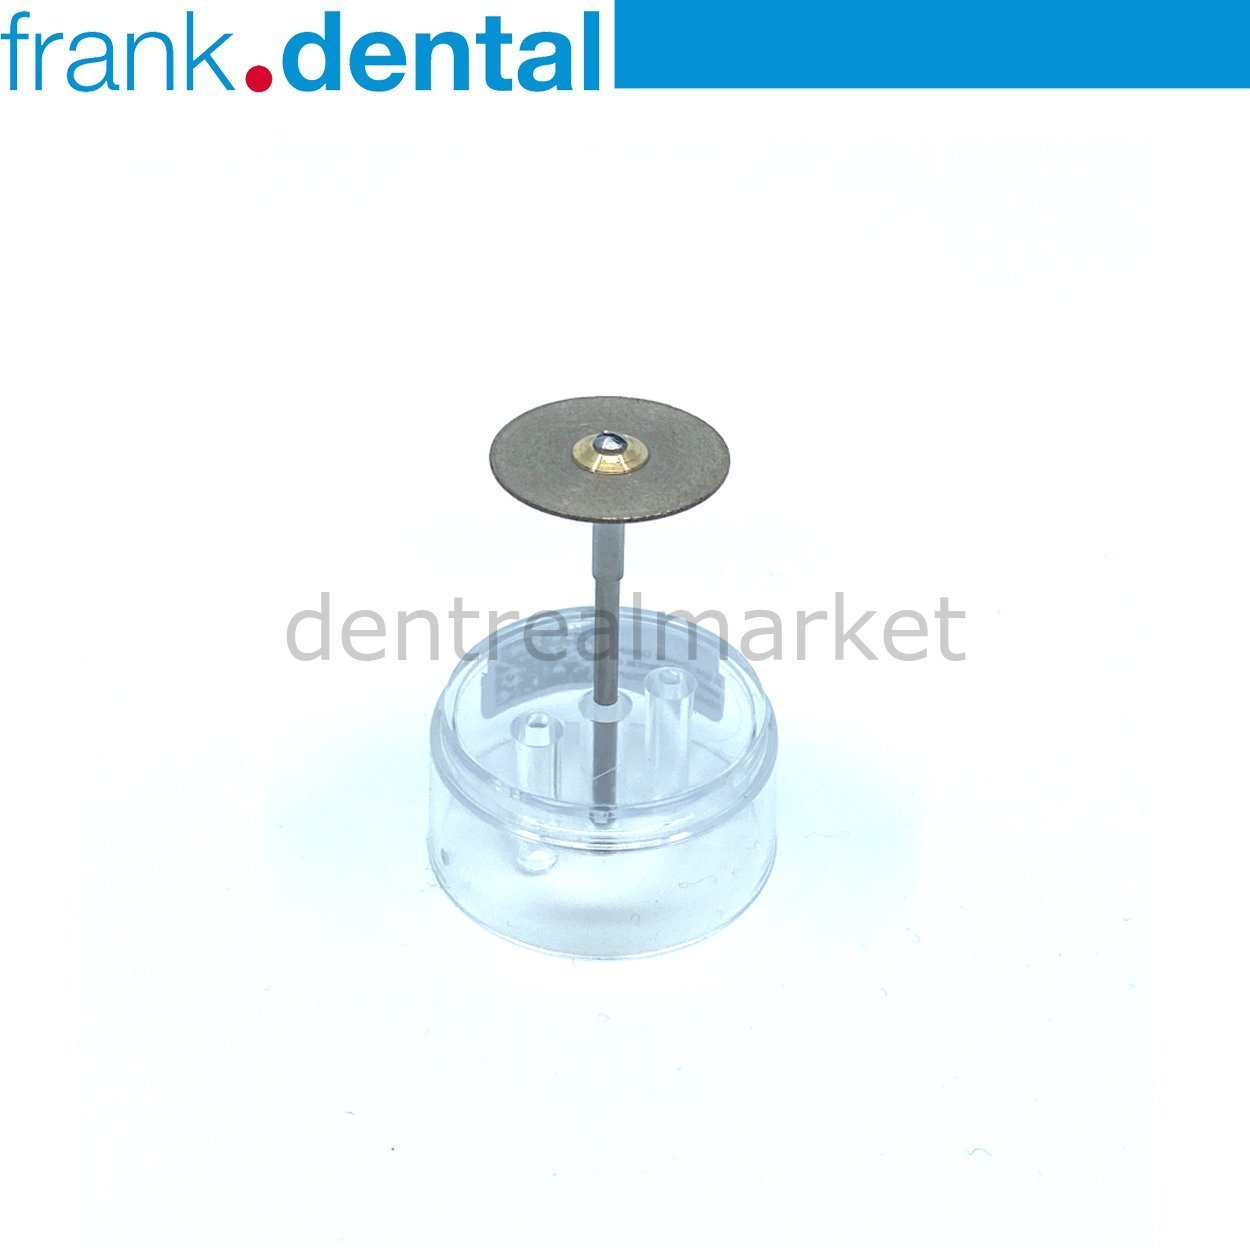 DentrealStore - Frank Dental Endless Diamond Separate Disc